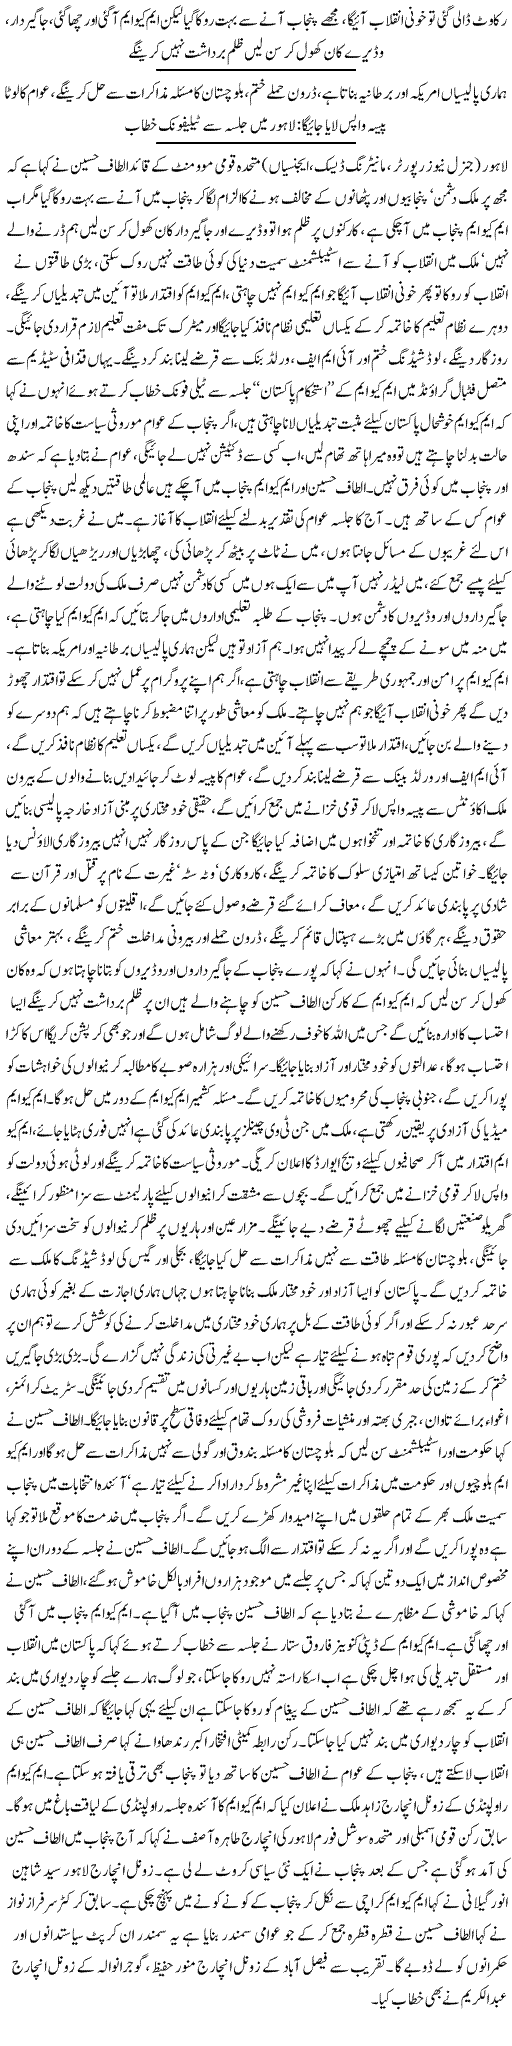 Altaf Hussain Addresses Jalsa In Lahore - News in Urdu